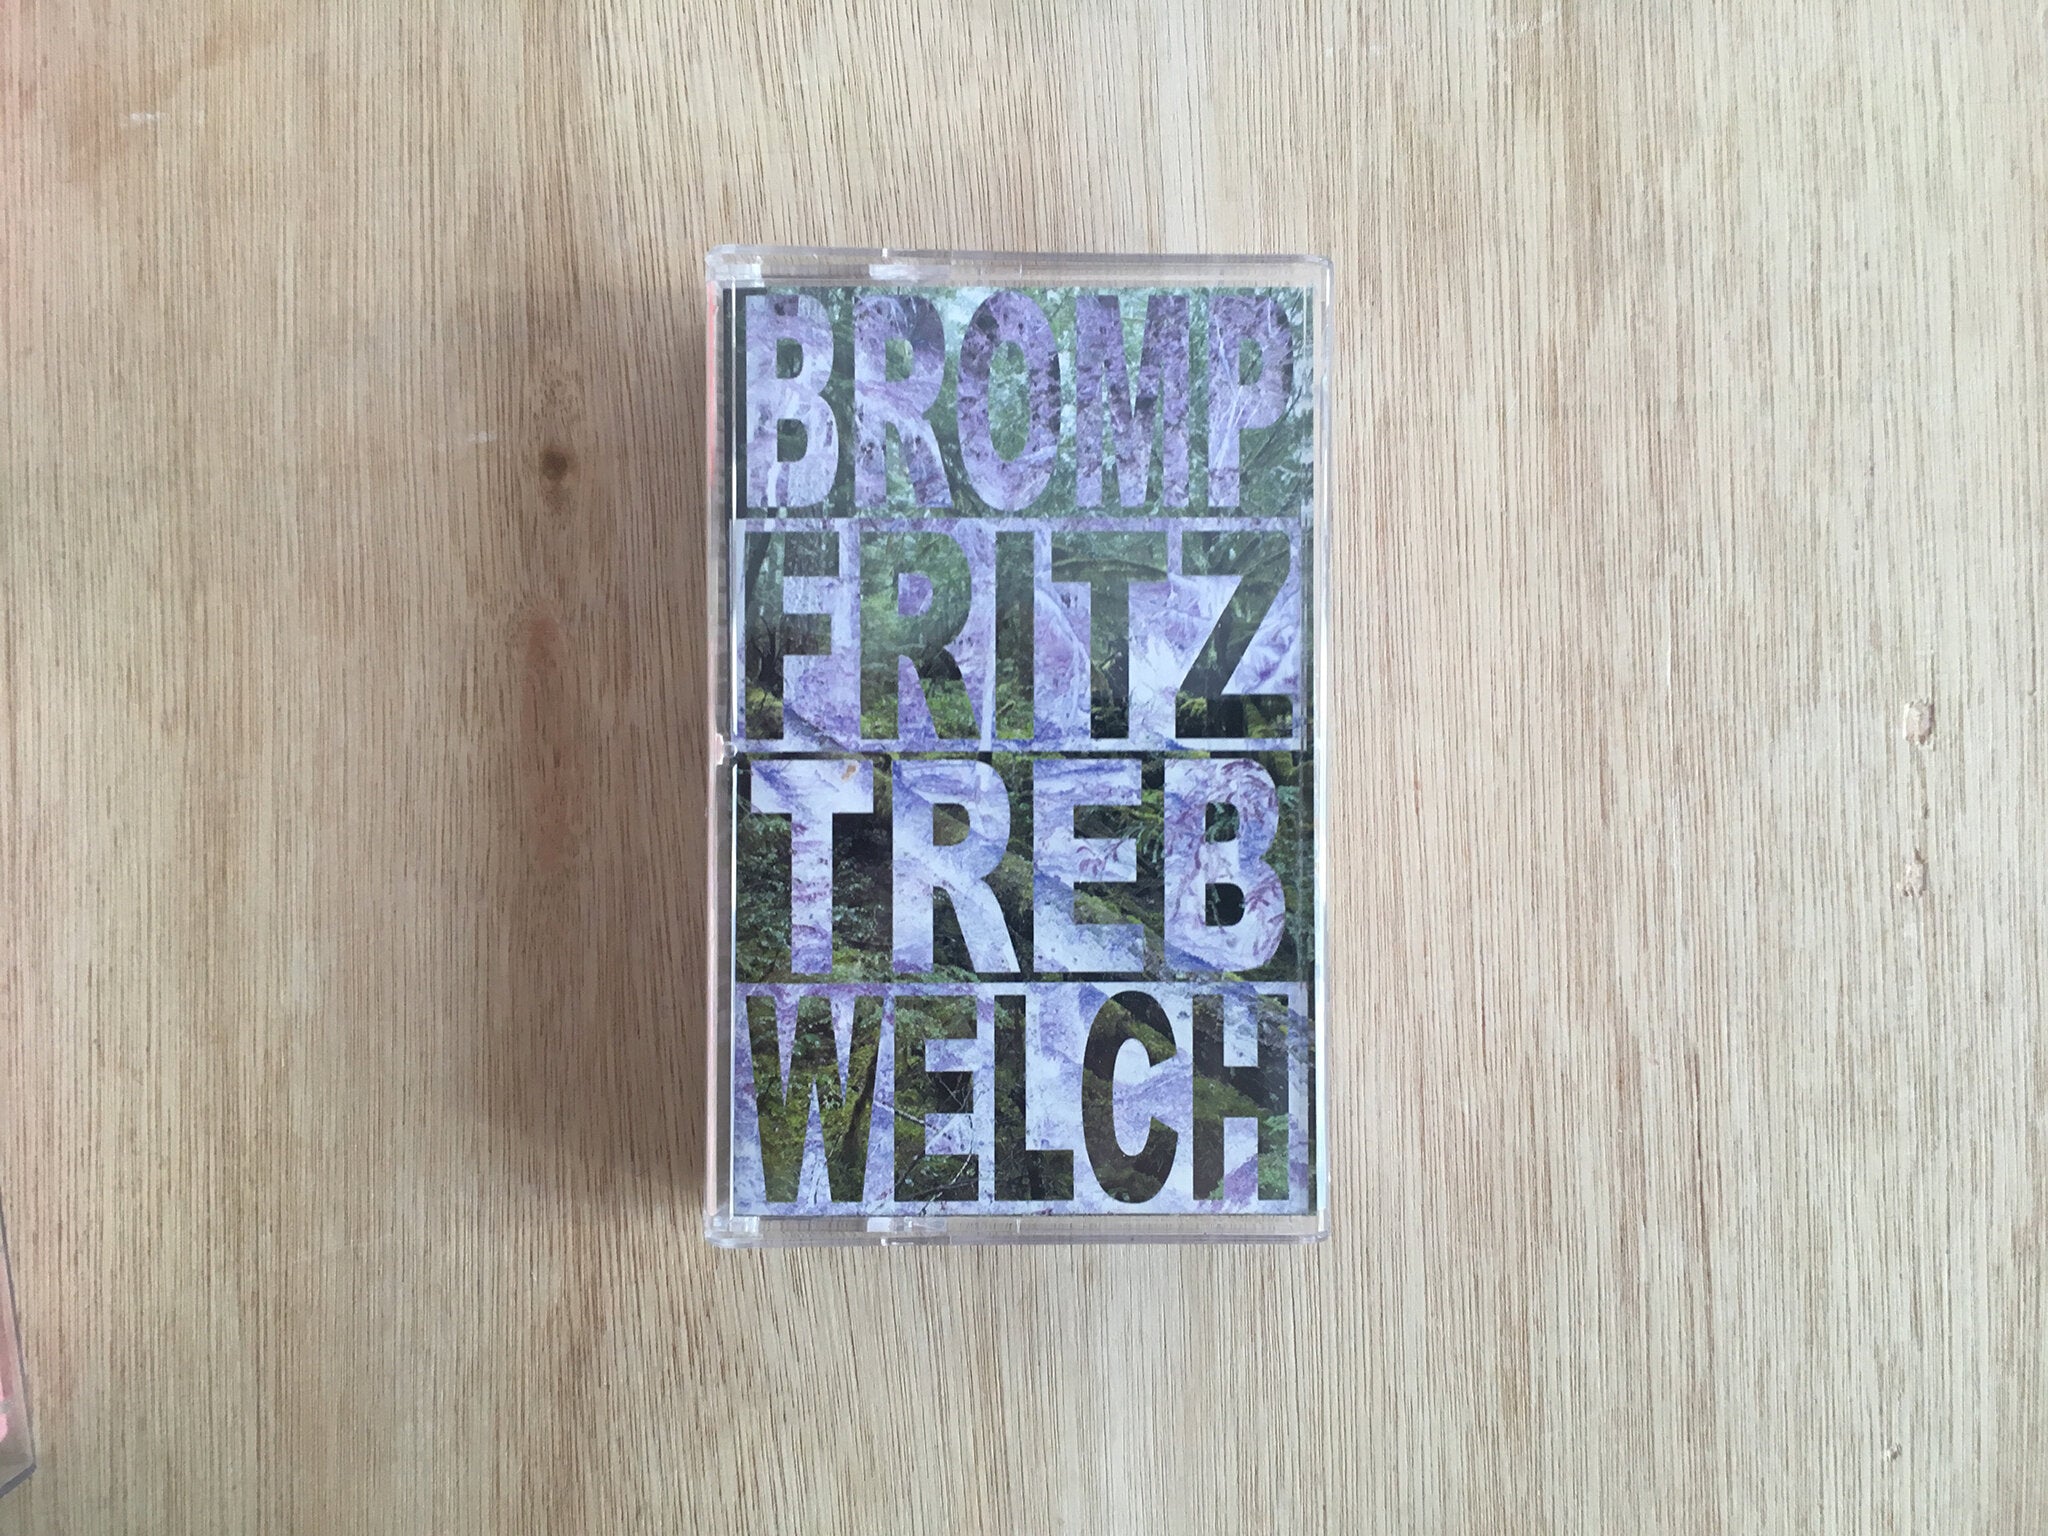 SPLIT by Bromp Treb/Fritz Welch